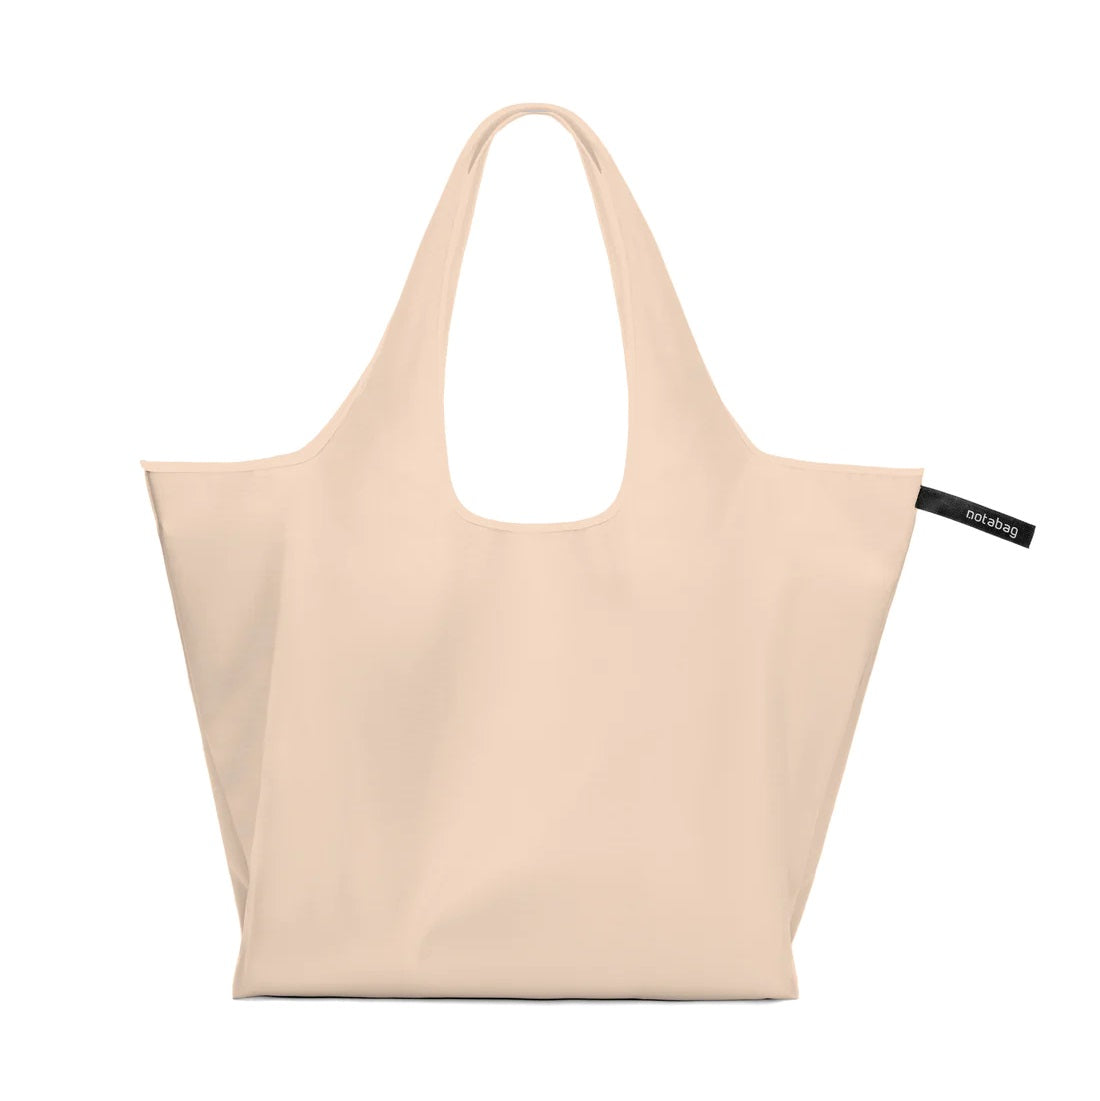 Notabag_tote_bag_foldable_Shopping_Bag_Sand_color.jpg